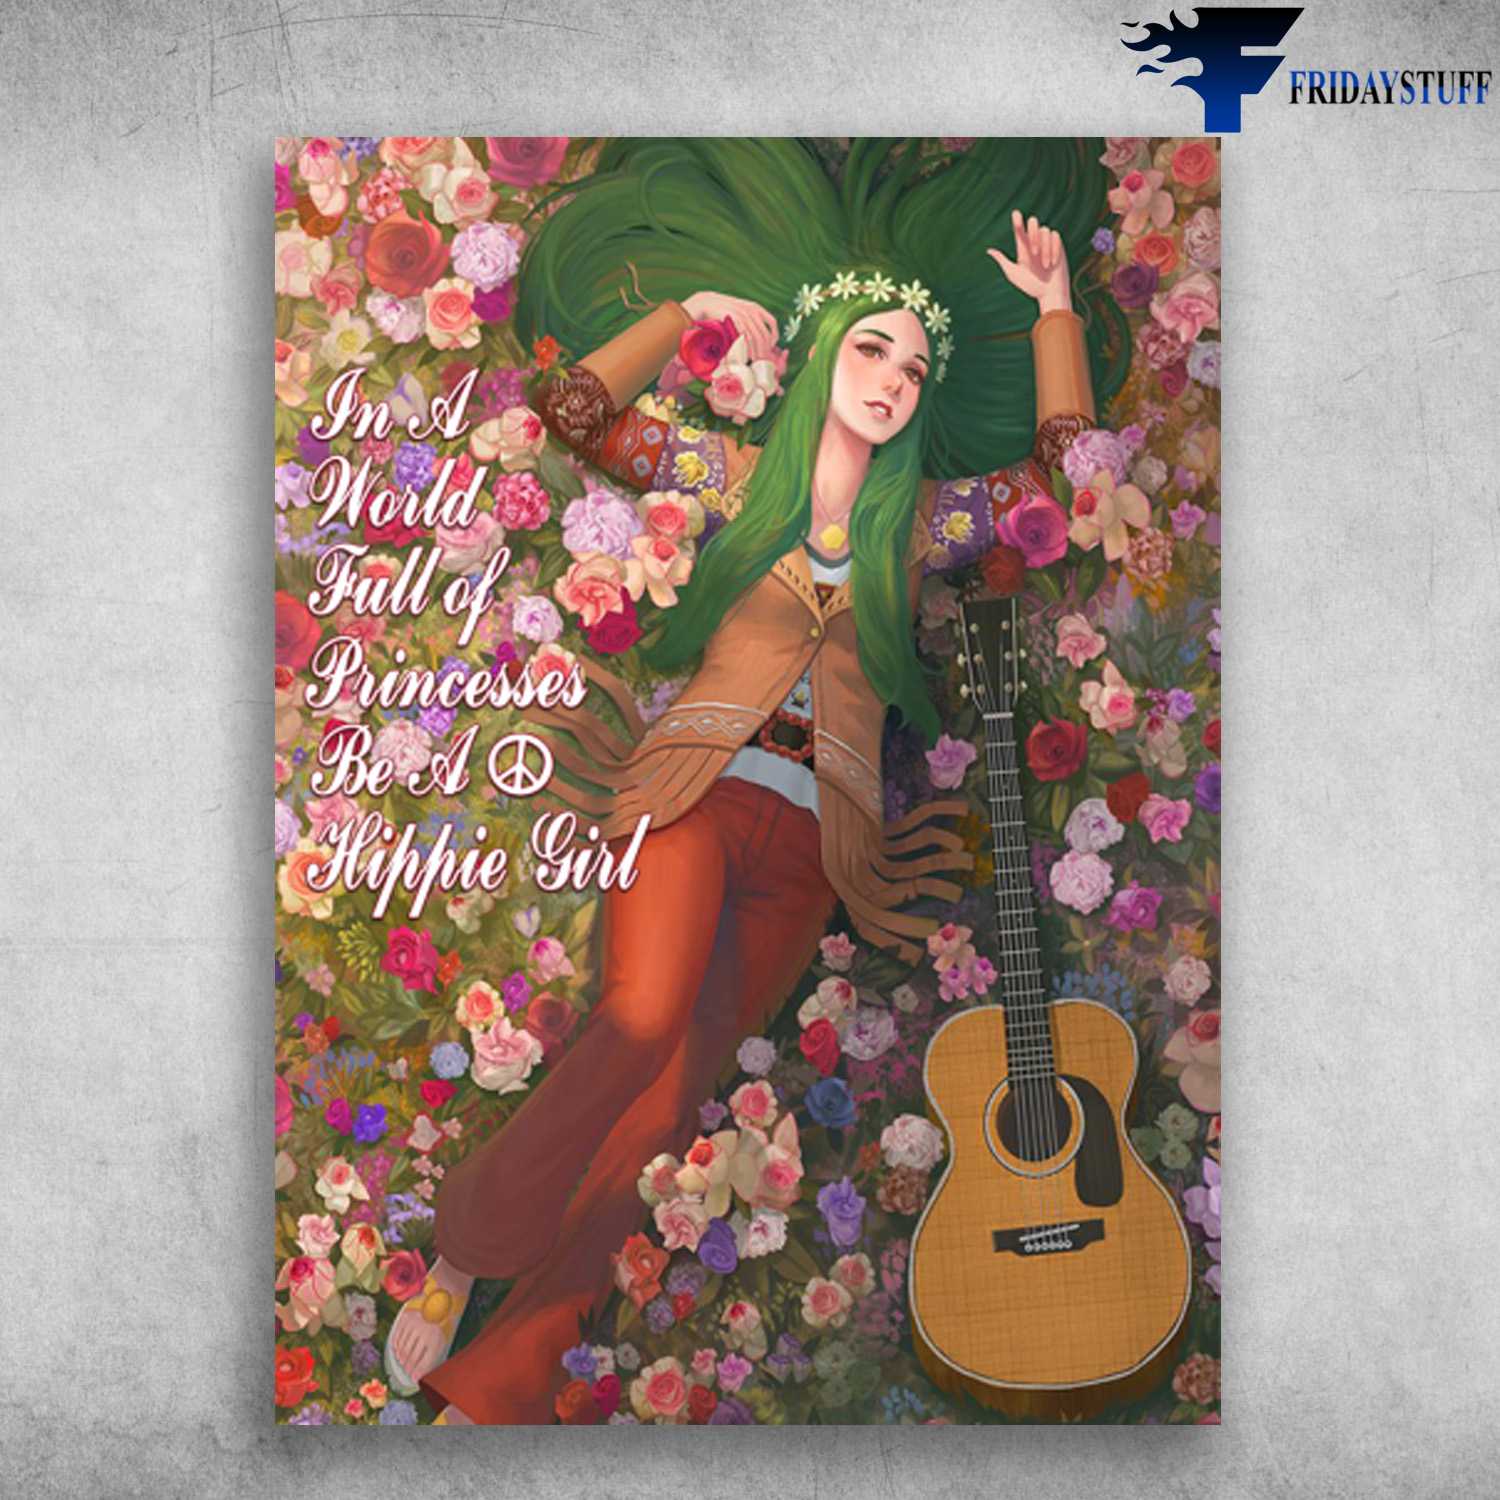 Guitar Girl, Flower Garden, Hippie Girl - In A World Full Of Princesses, Be A Hippie Girl